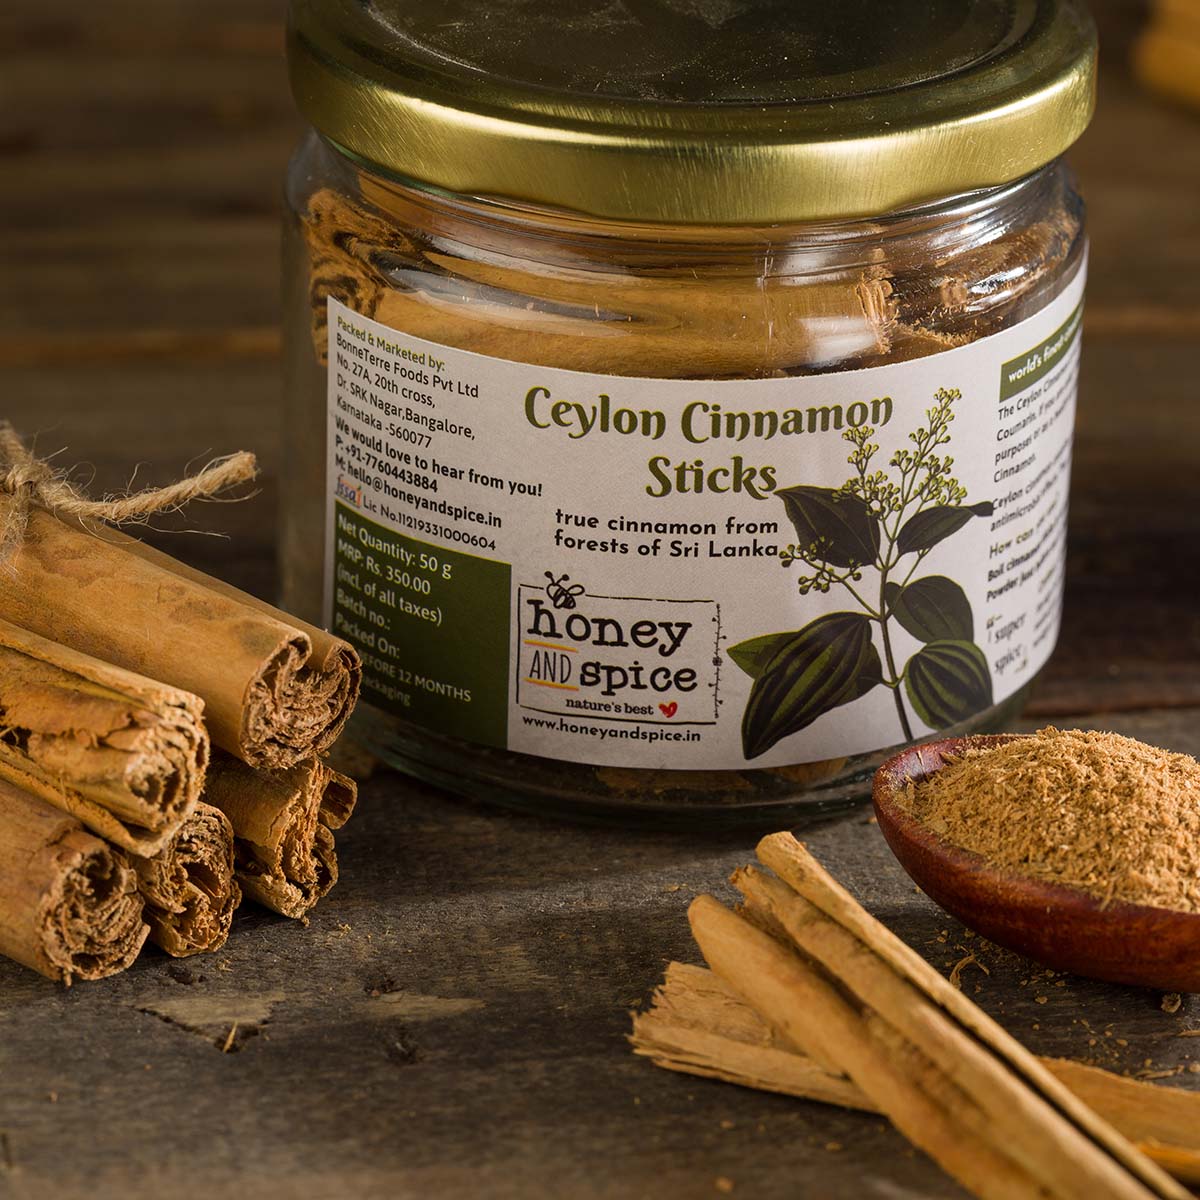 Product: Honey and Spice Ceylon Cinnamon Sticks